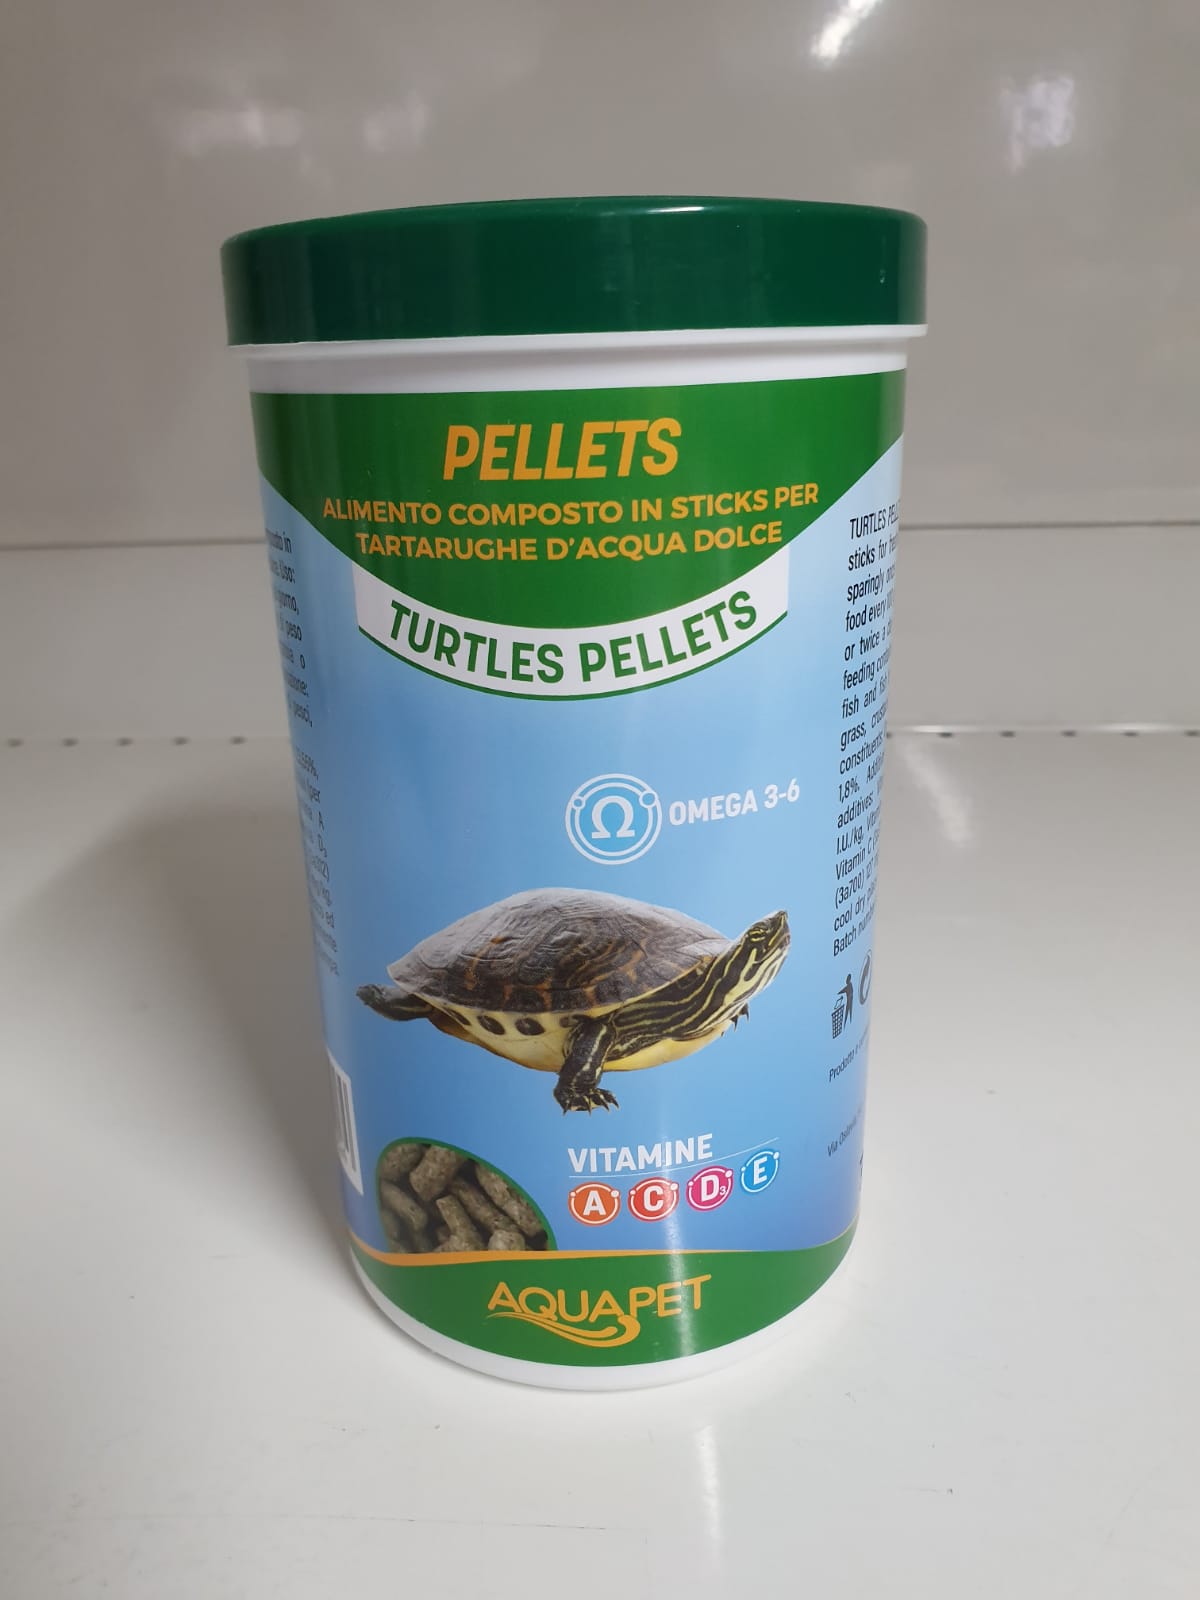 turtles pellets sticks per tartarughe d'acqua dolce 350g